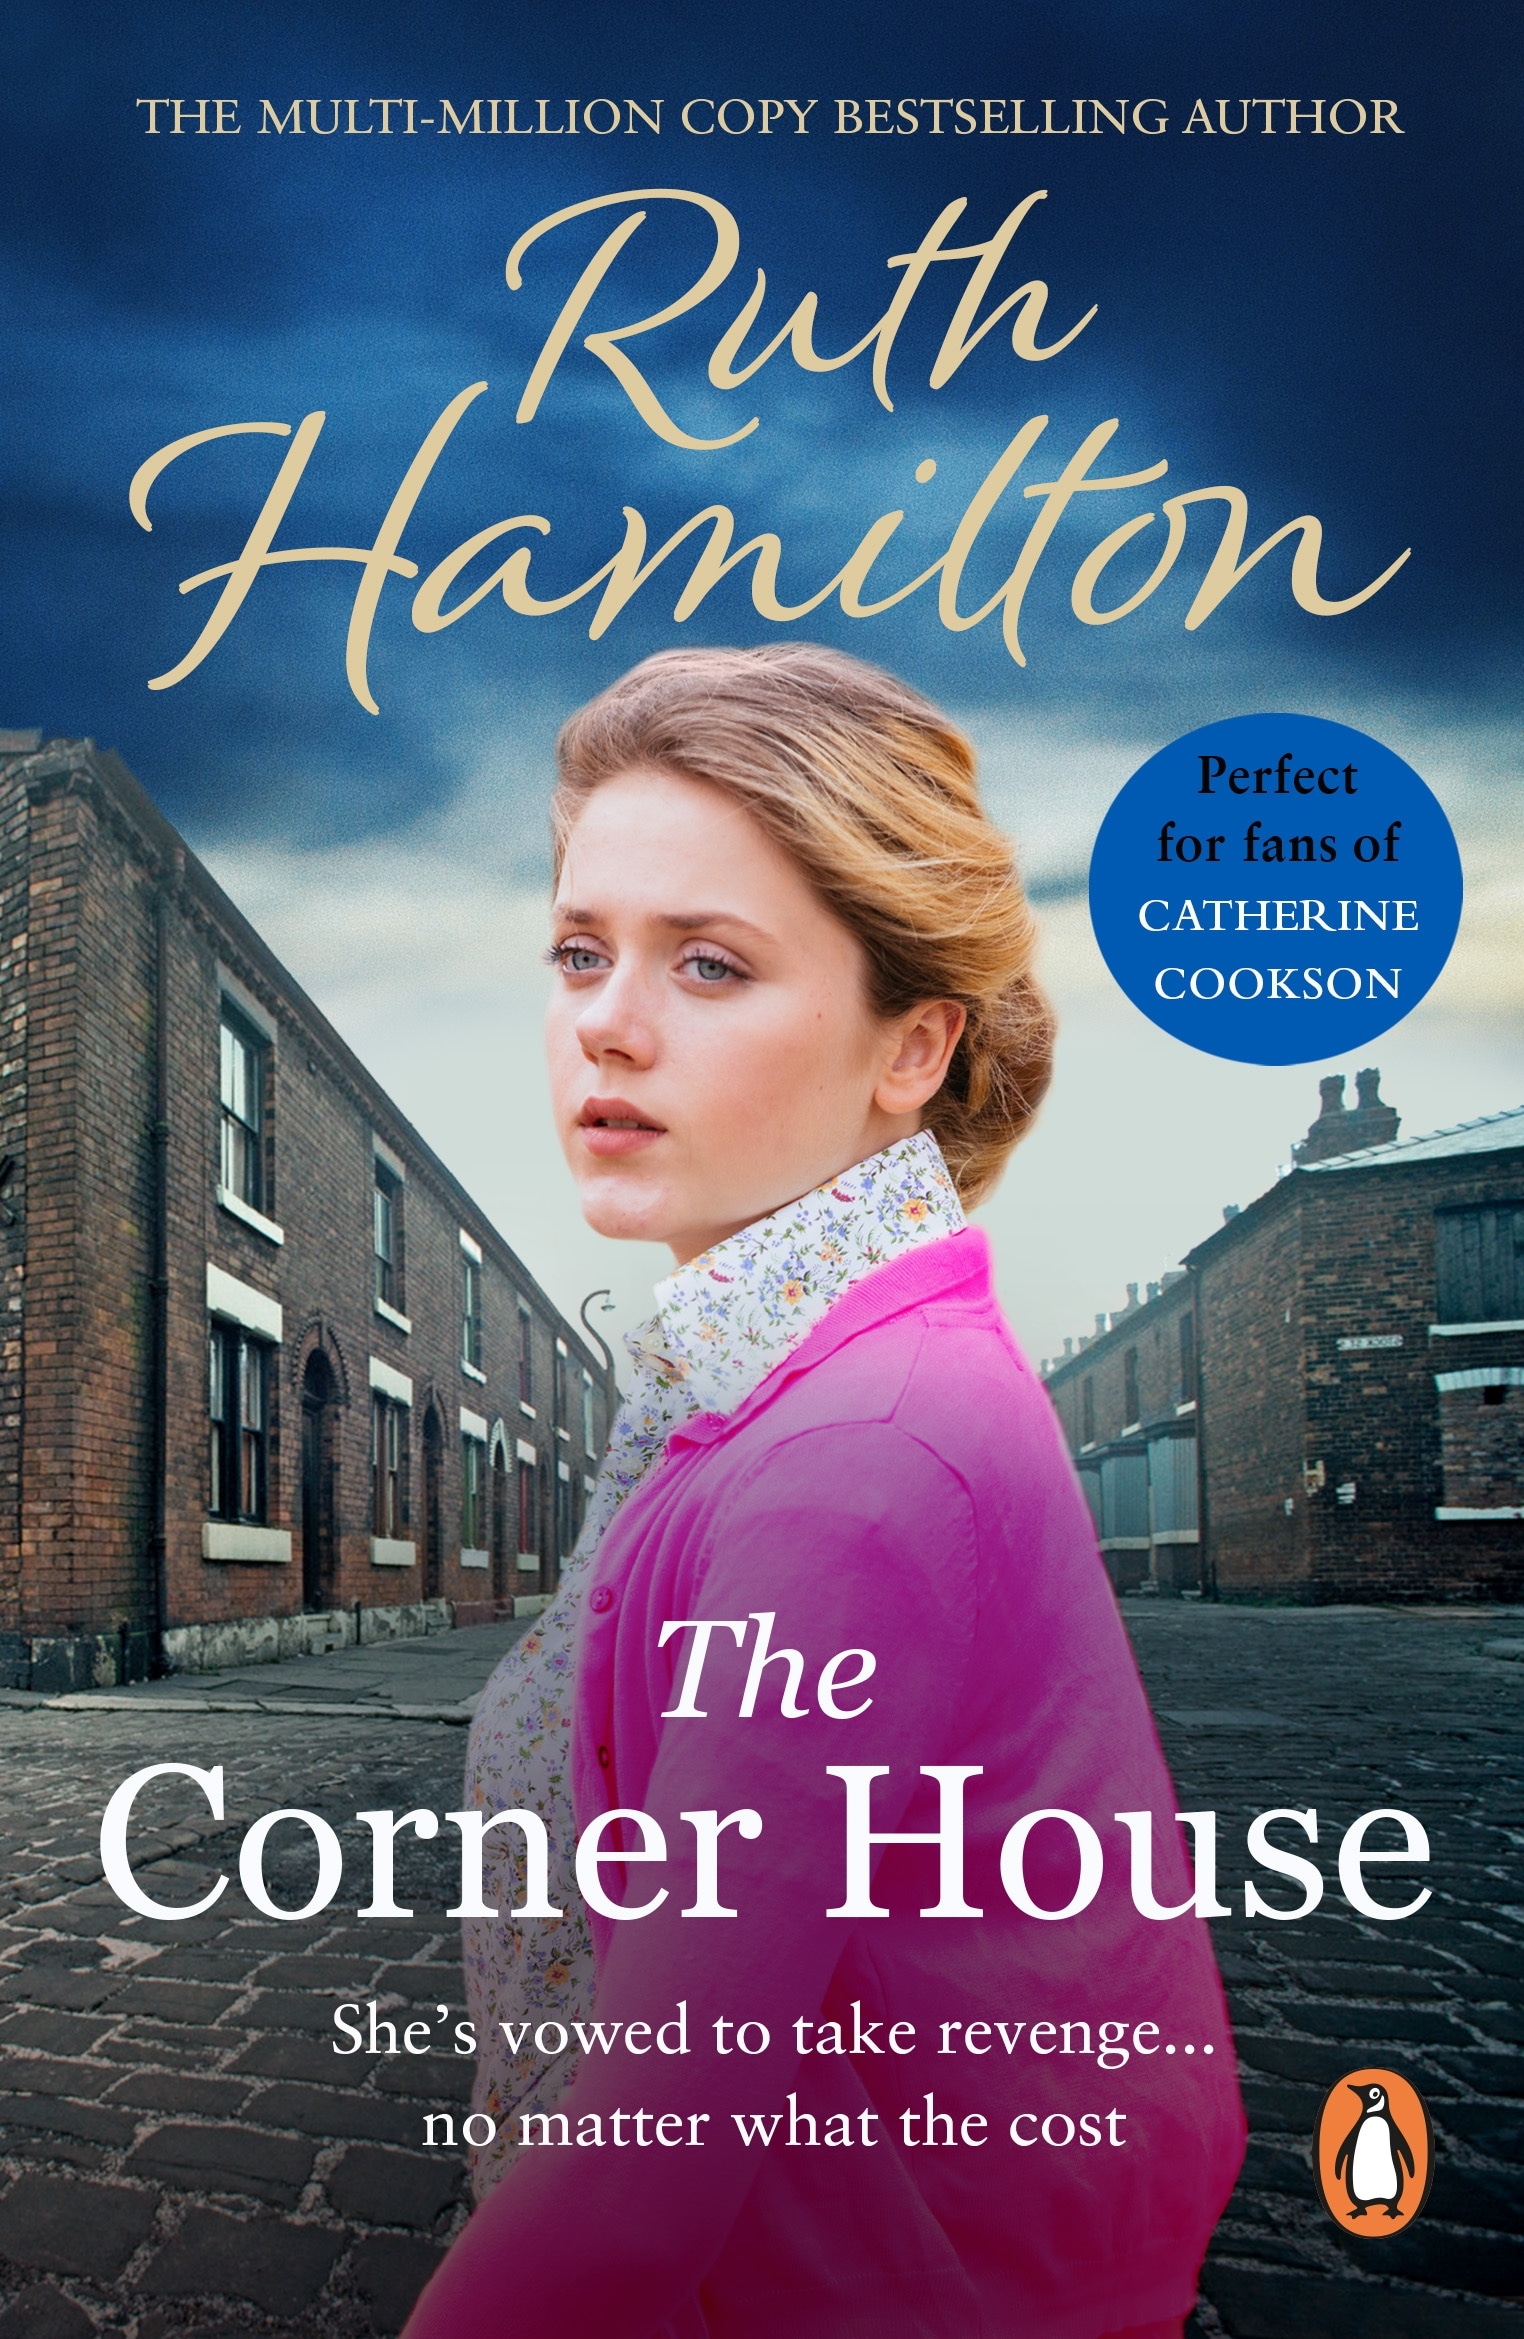 Book “The Corner House” by Ruth Hamilton — January 6, 2022